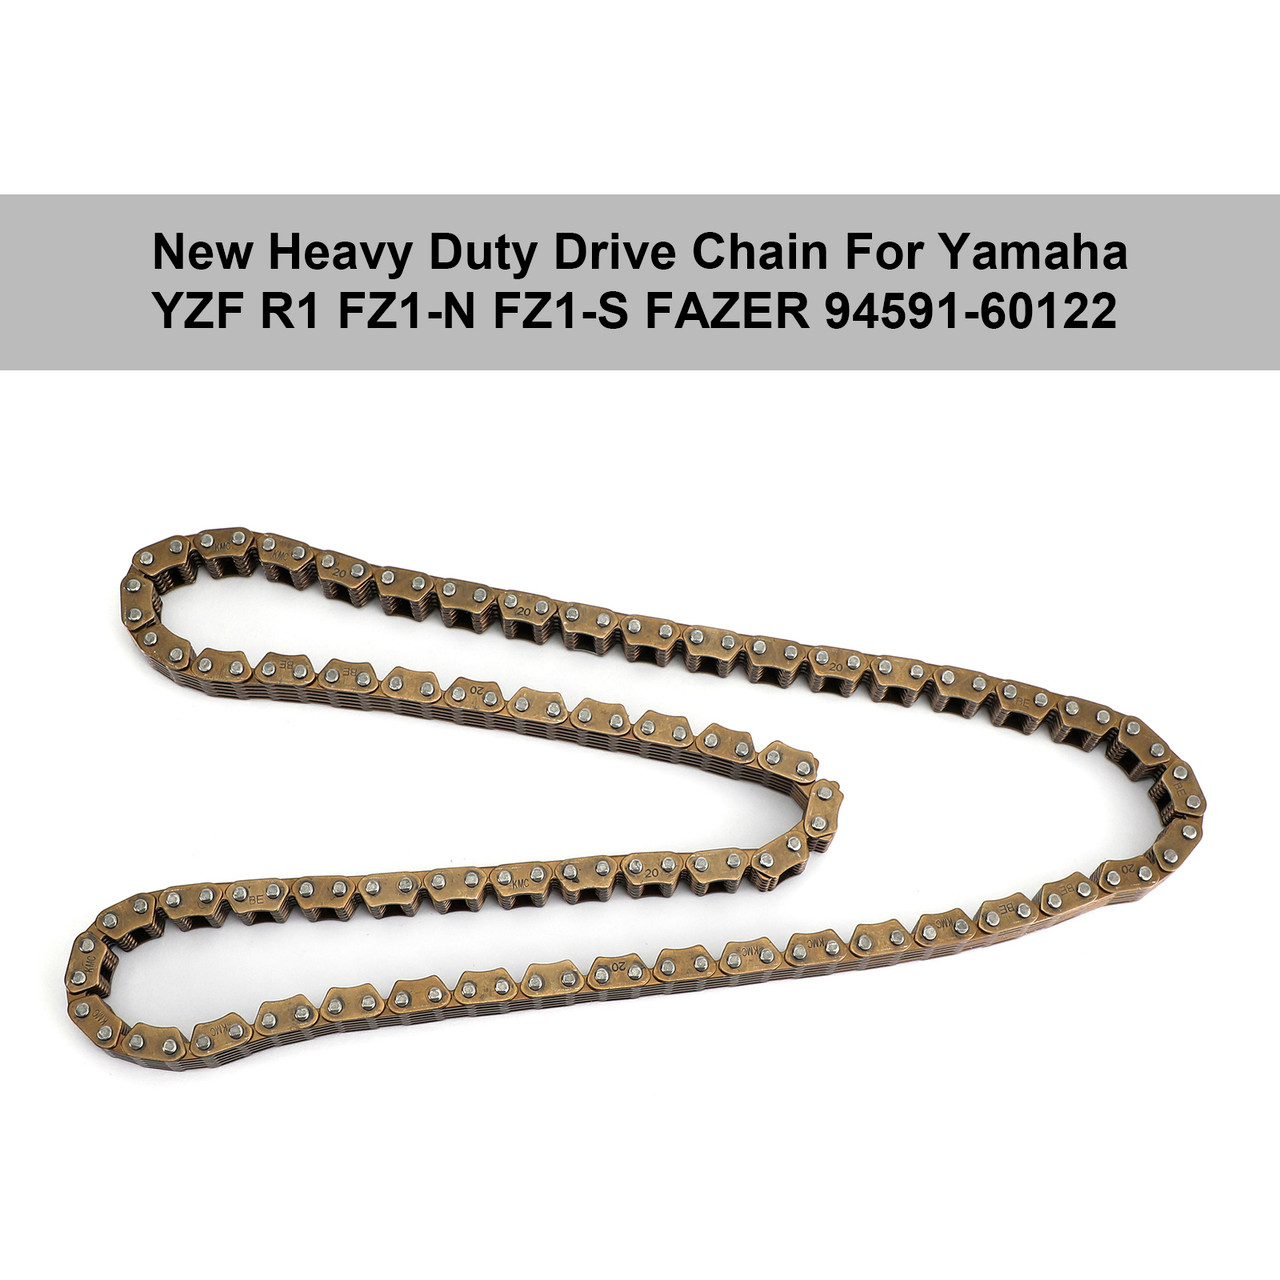 Heavy Duty Drive Chain For Yamaha YZF R1 FZ1-N FZ1-S FAZER 94591-60122